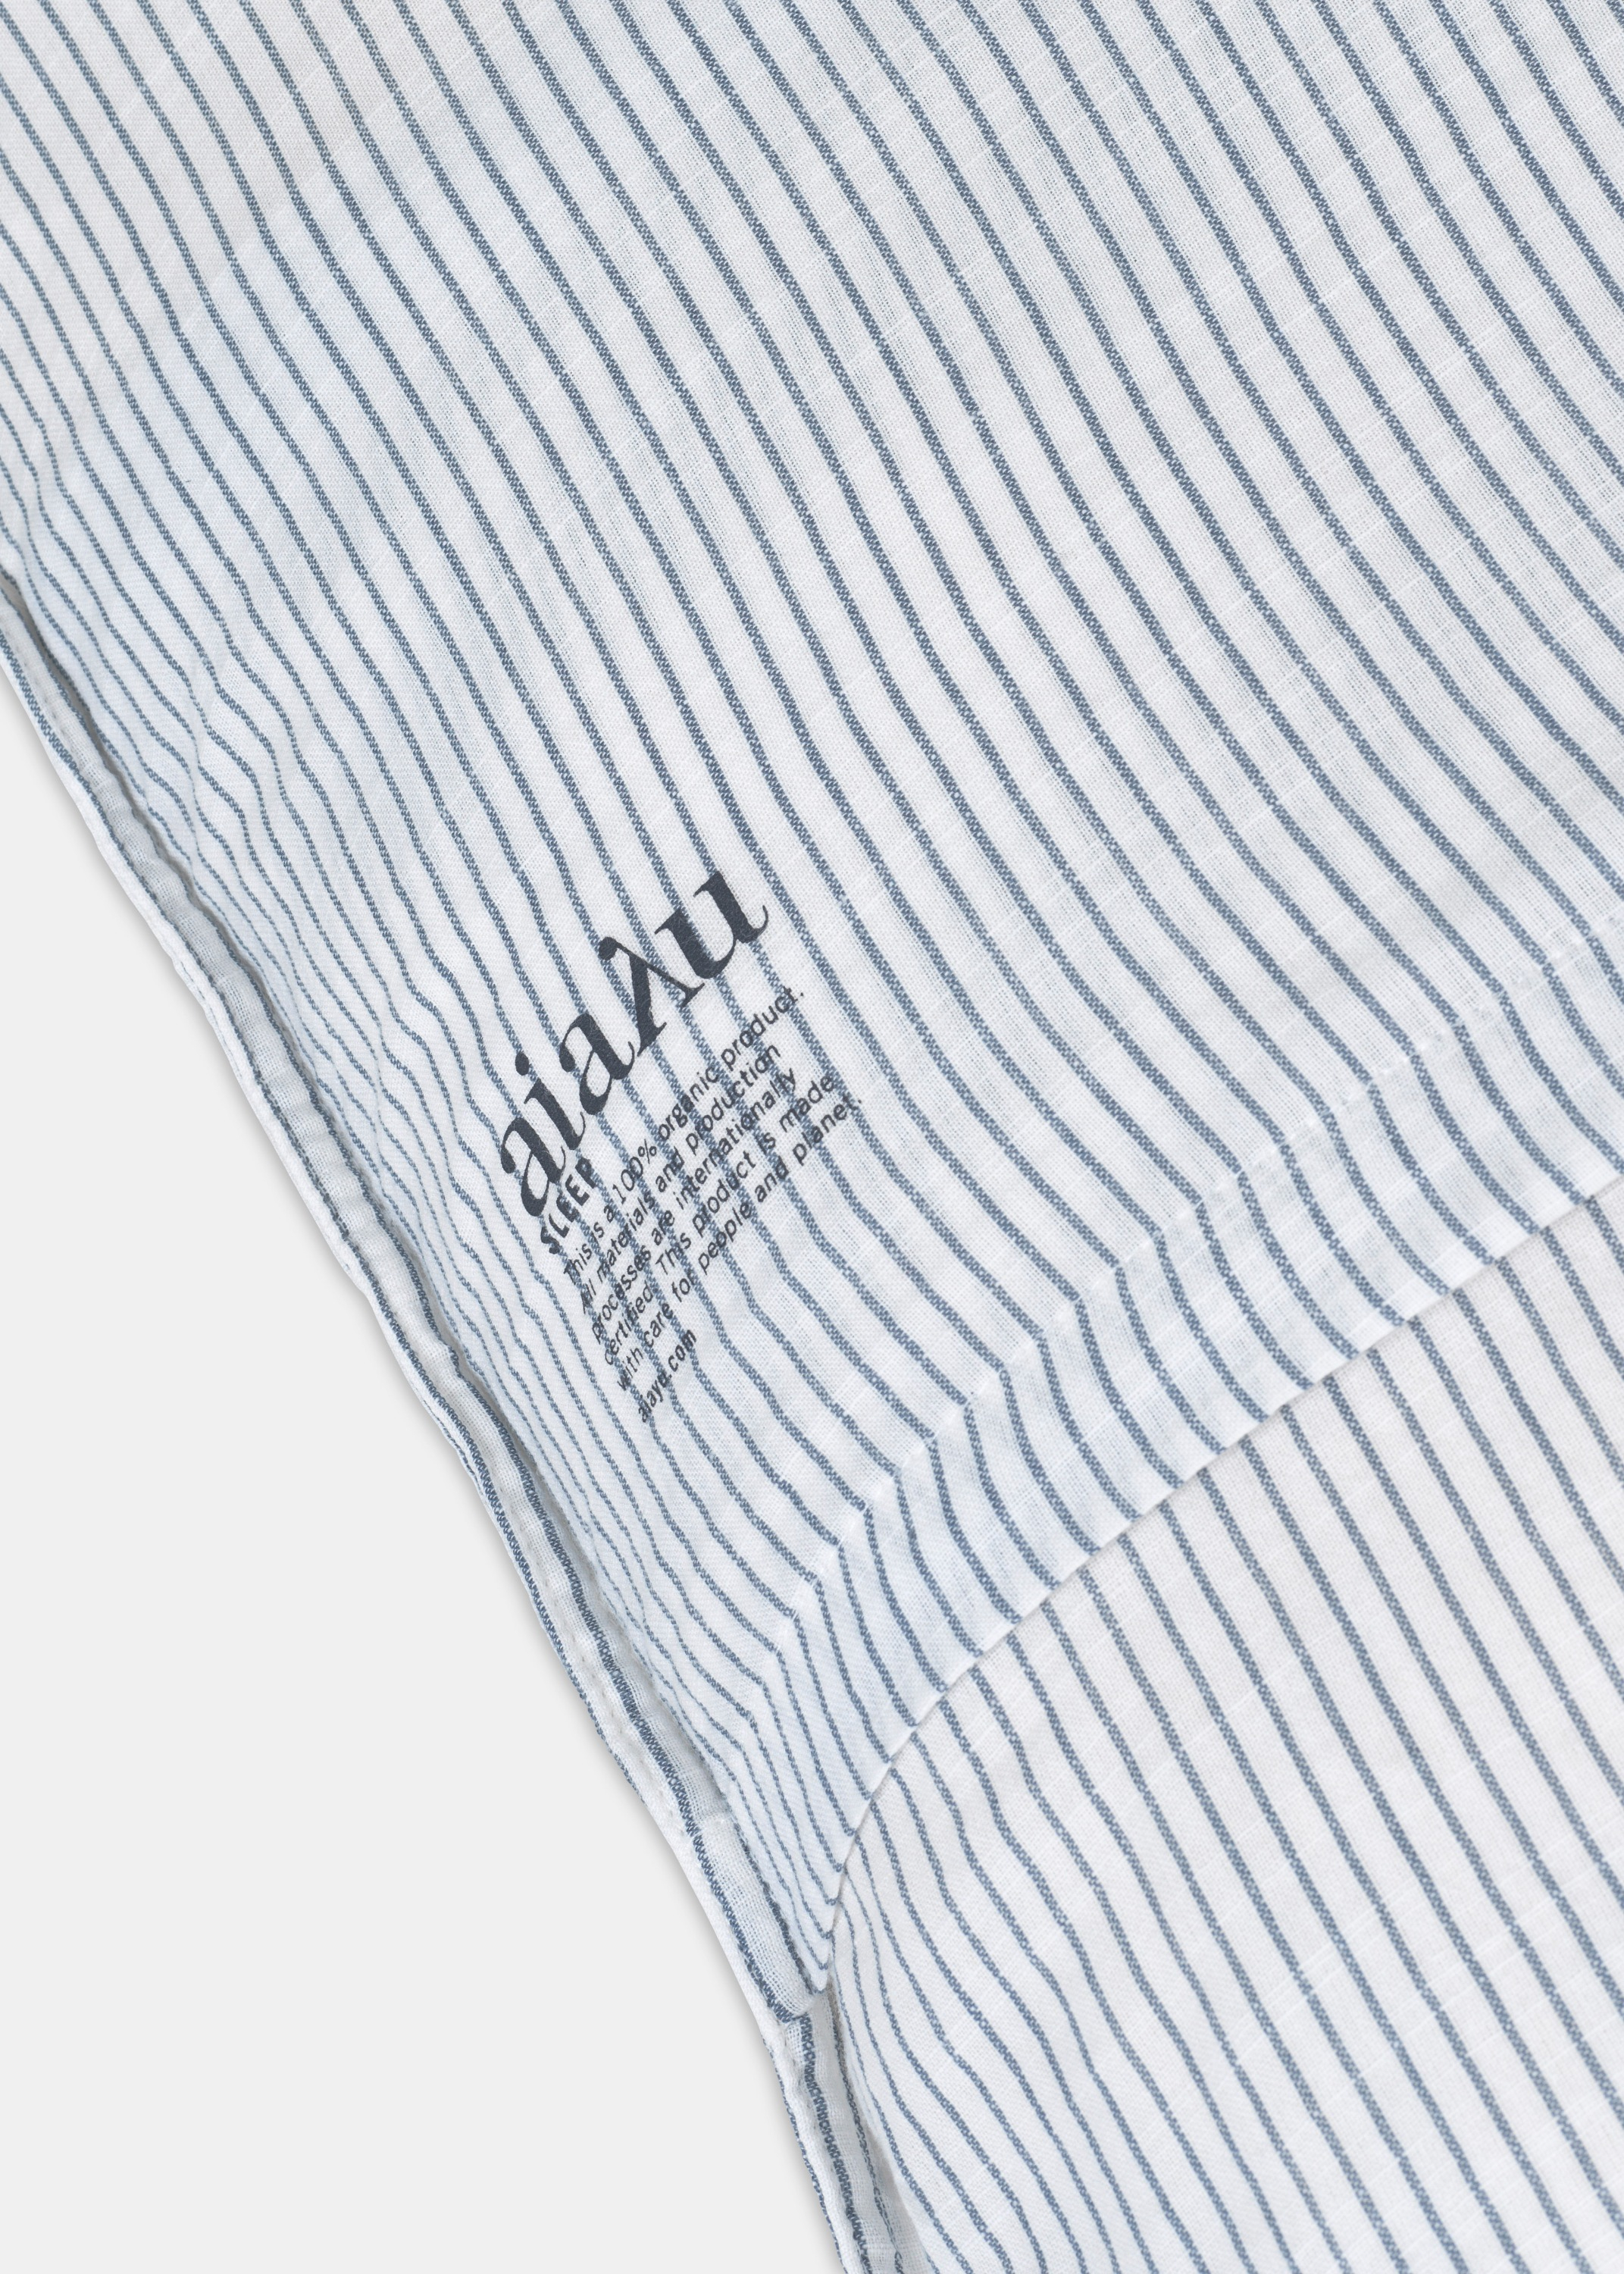 Bedlinen - Duvet Set Double - Striped (200x220 + 2 pillow cases) Thumbnail